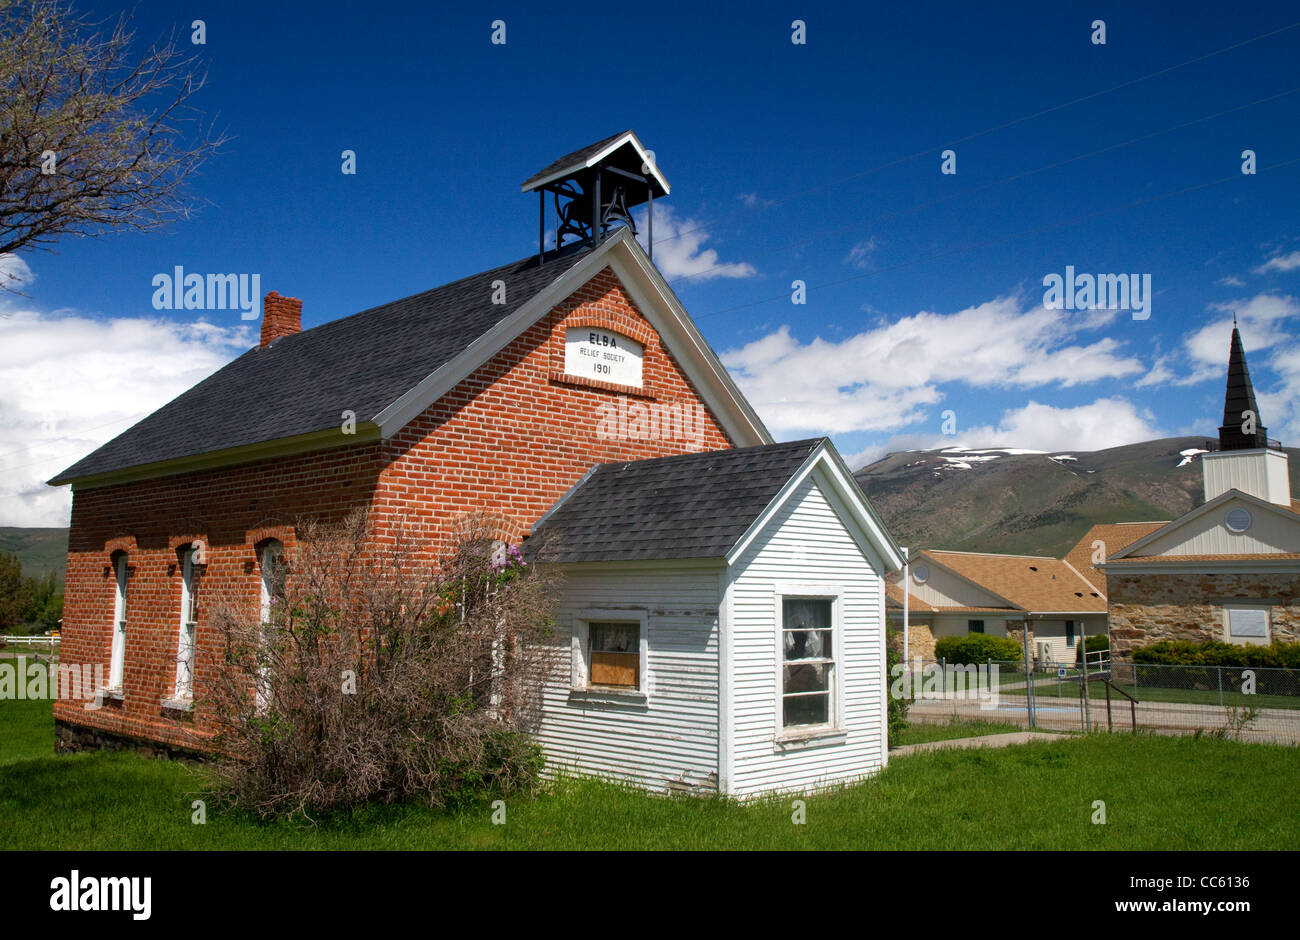 Elba Relief Society building located in Cassia County, Idaho, USA. Stock Photo